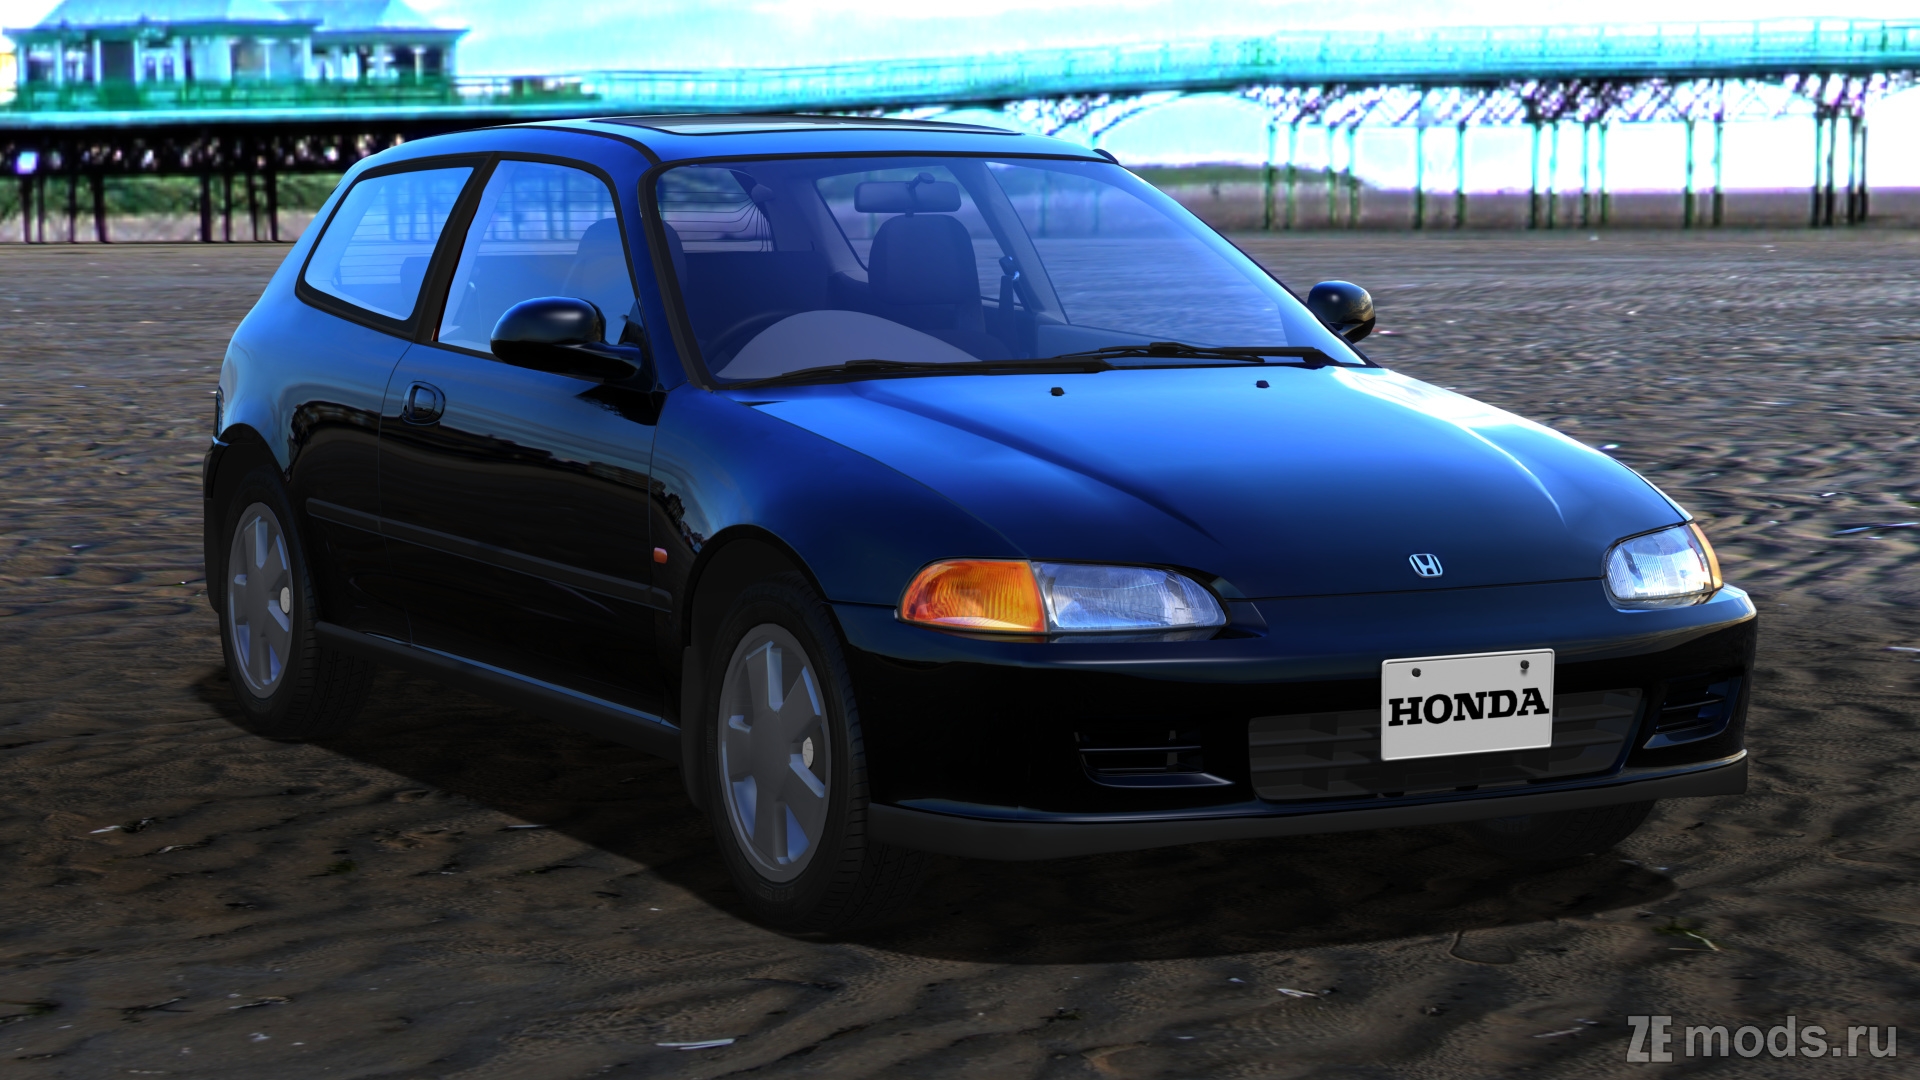 Мод Honda Civic eg6 версия REV 3a для Assetto Corsa